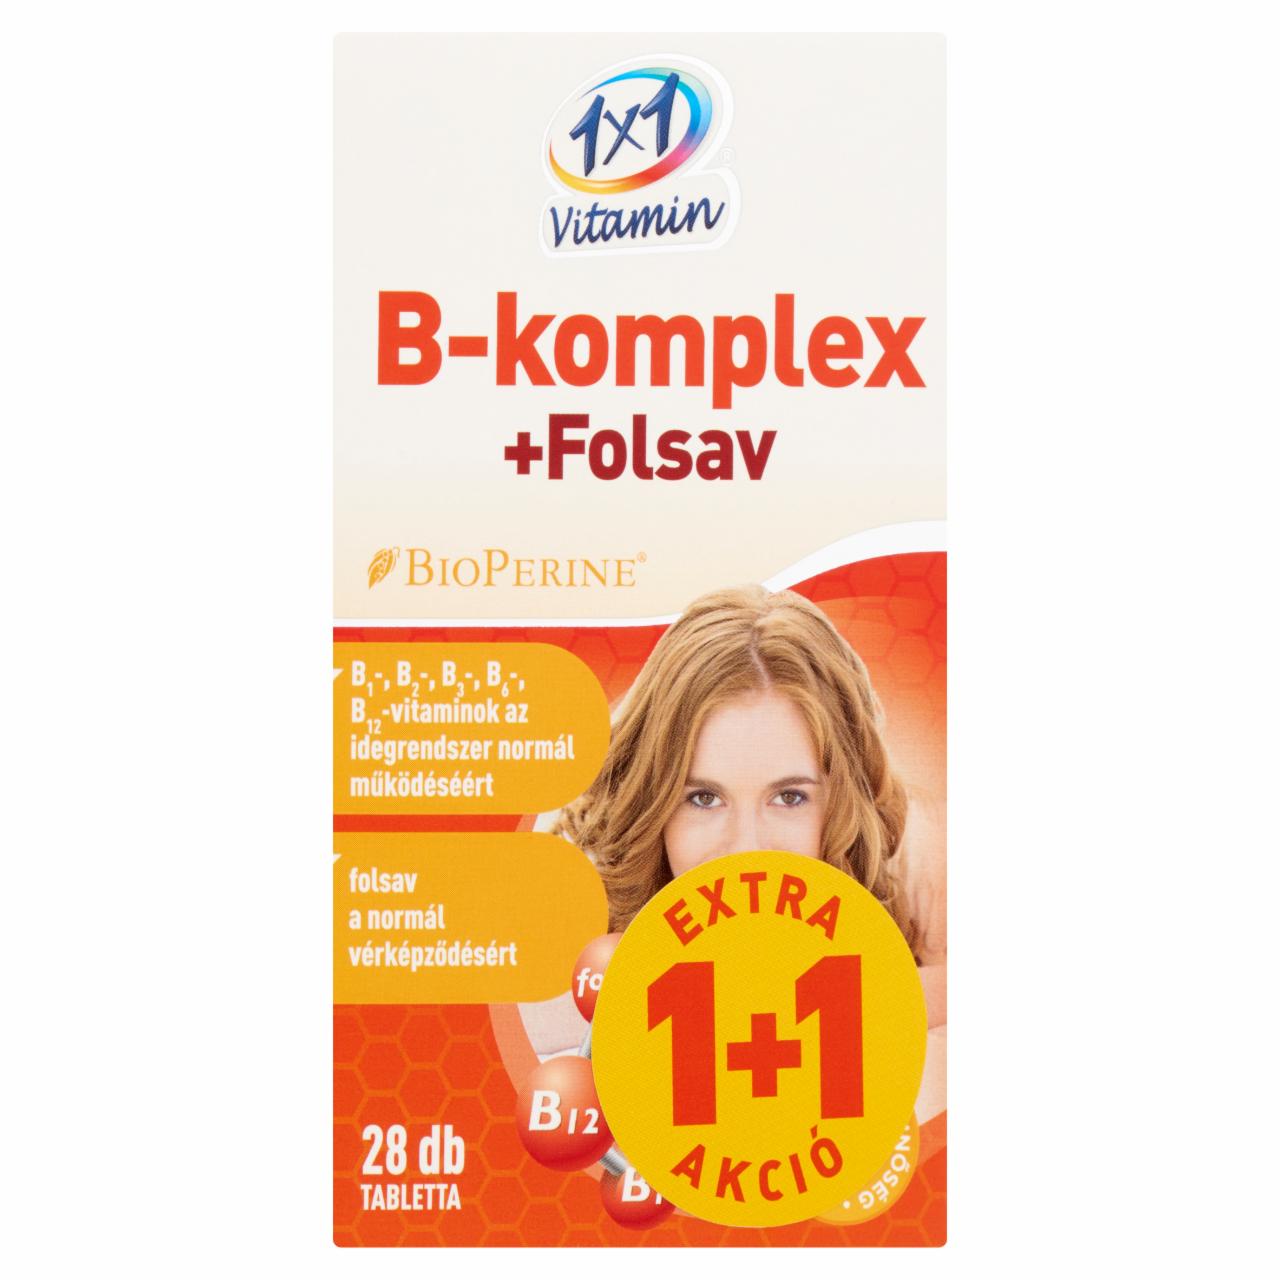 Képek - 1x1 Vitamin B-komplex + Folsav étrend-kiegészítő filmtabletta 2 x 28 db